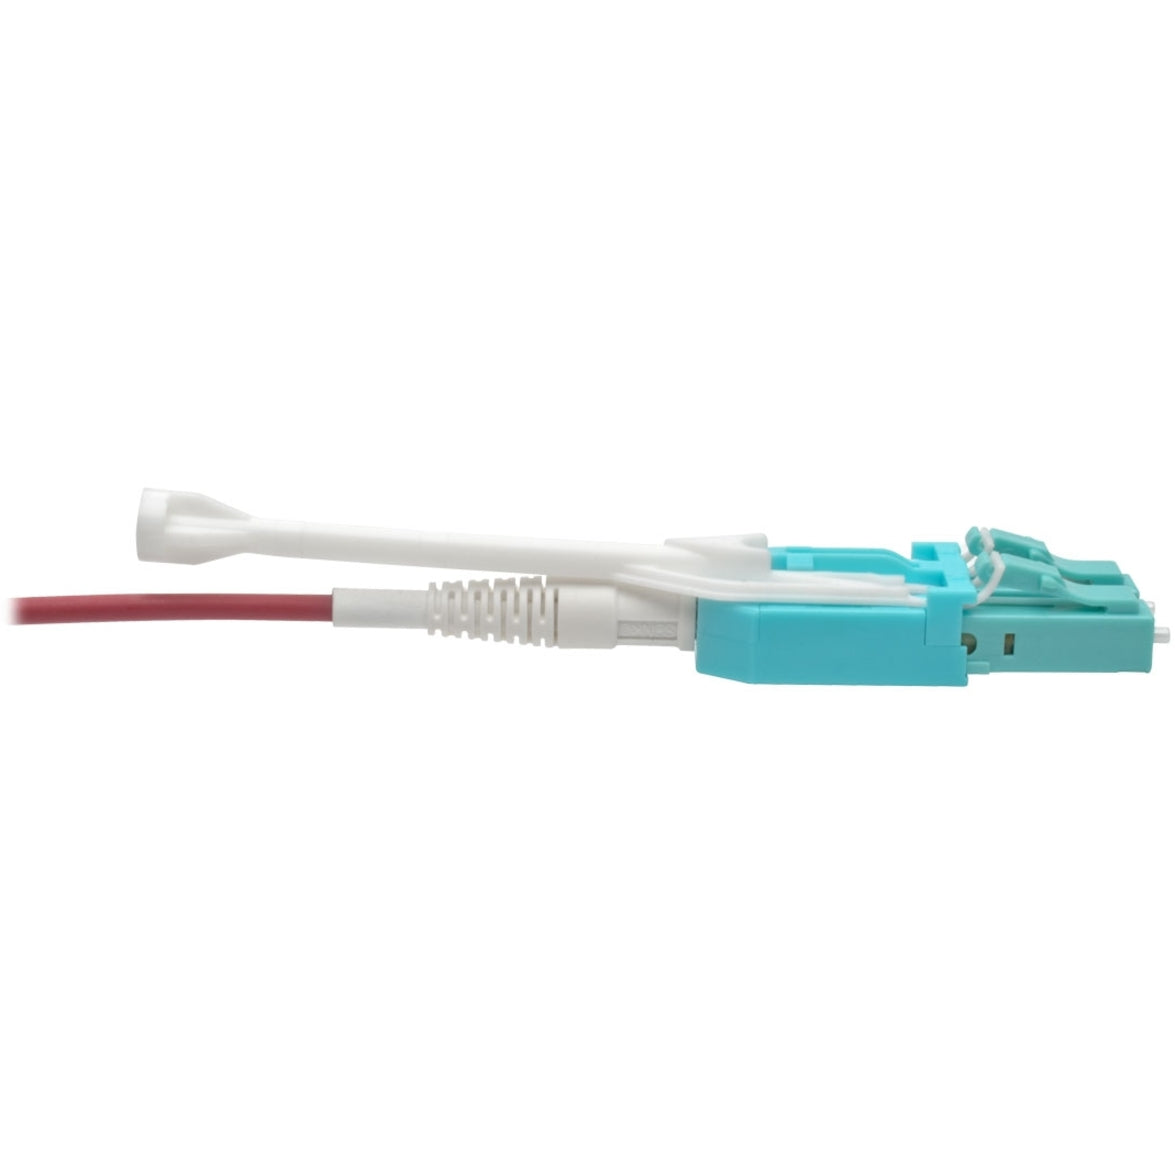 Tripp Lite N821-01M-MG-T Fiber Optic Network Cable, 3.30 ft, Multi-mode, 100 Gbit/s, Magenta